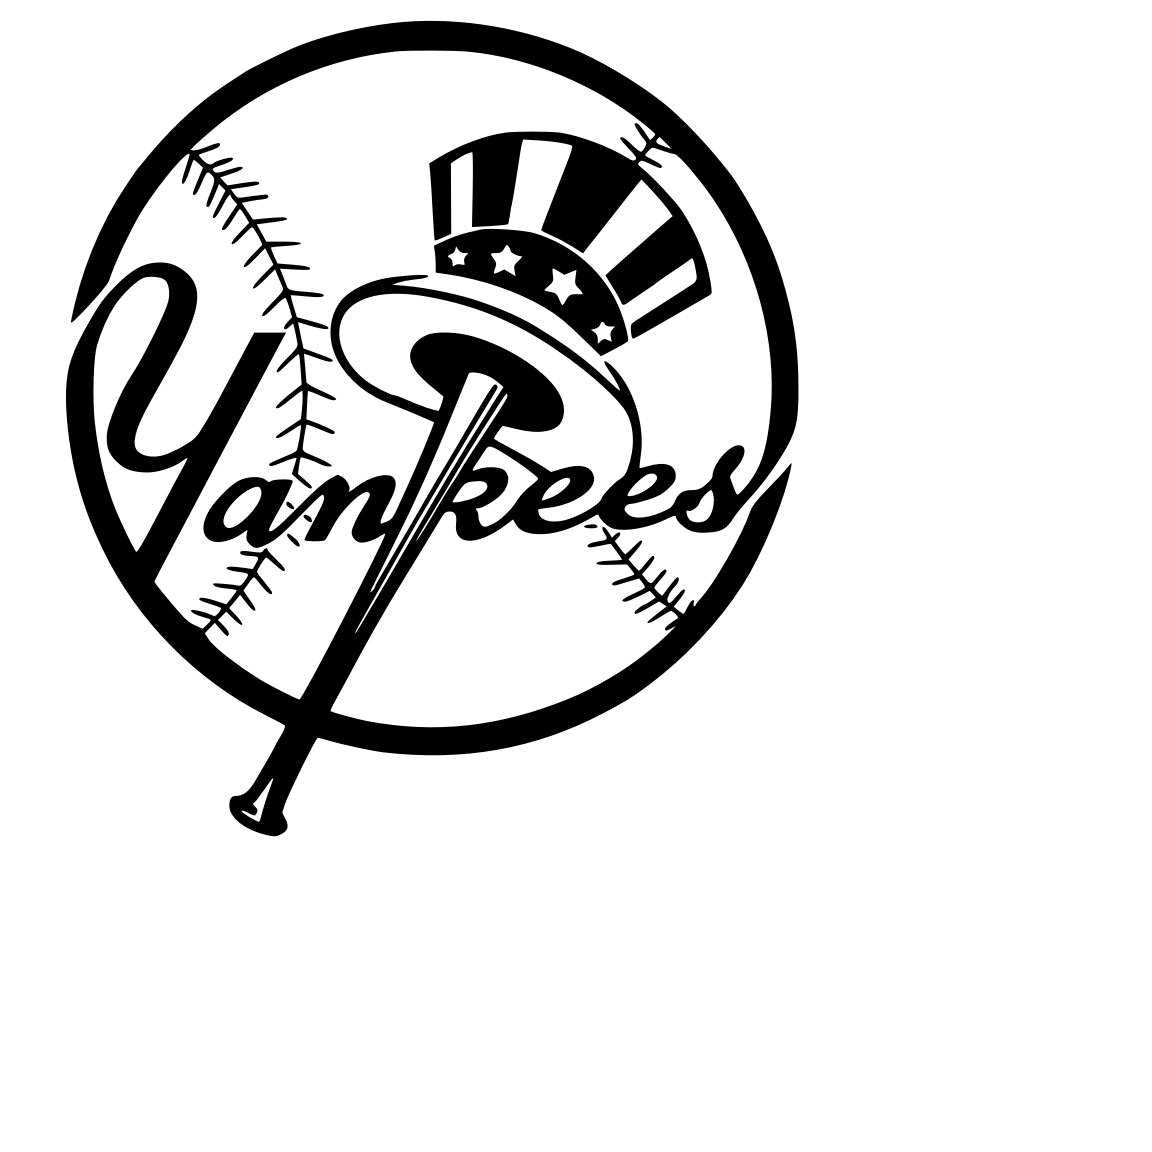 New York Yankees Team Logo - Dropbox - Yankees.svg | Vinyl | New York Yankees, MLB, Baseball